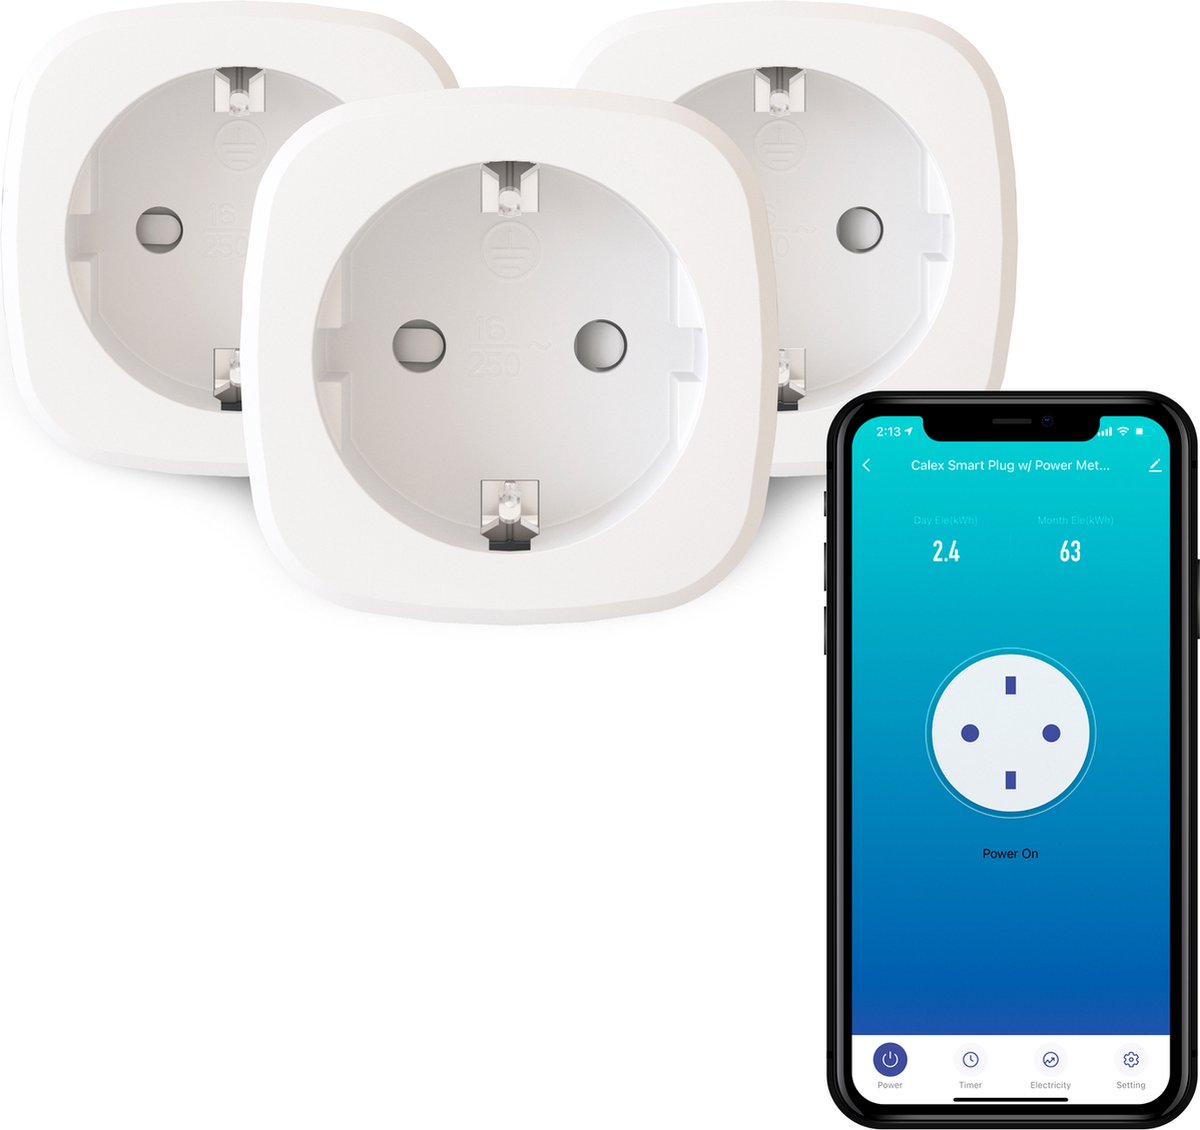 Calex Slimme Stekker - Set van 3 stuks - Energiemeter - Smart Plug met App Bediening - Werkt met Alexa en Google Home